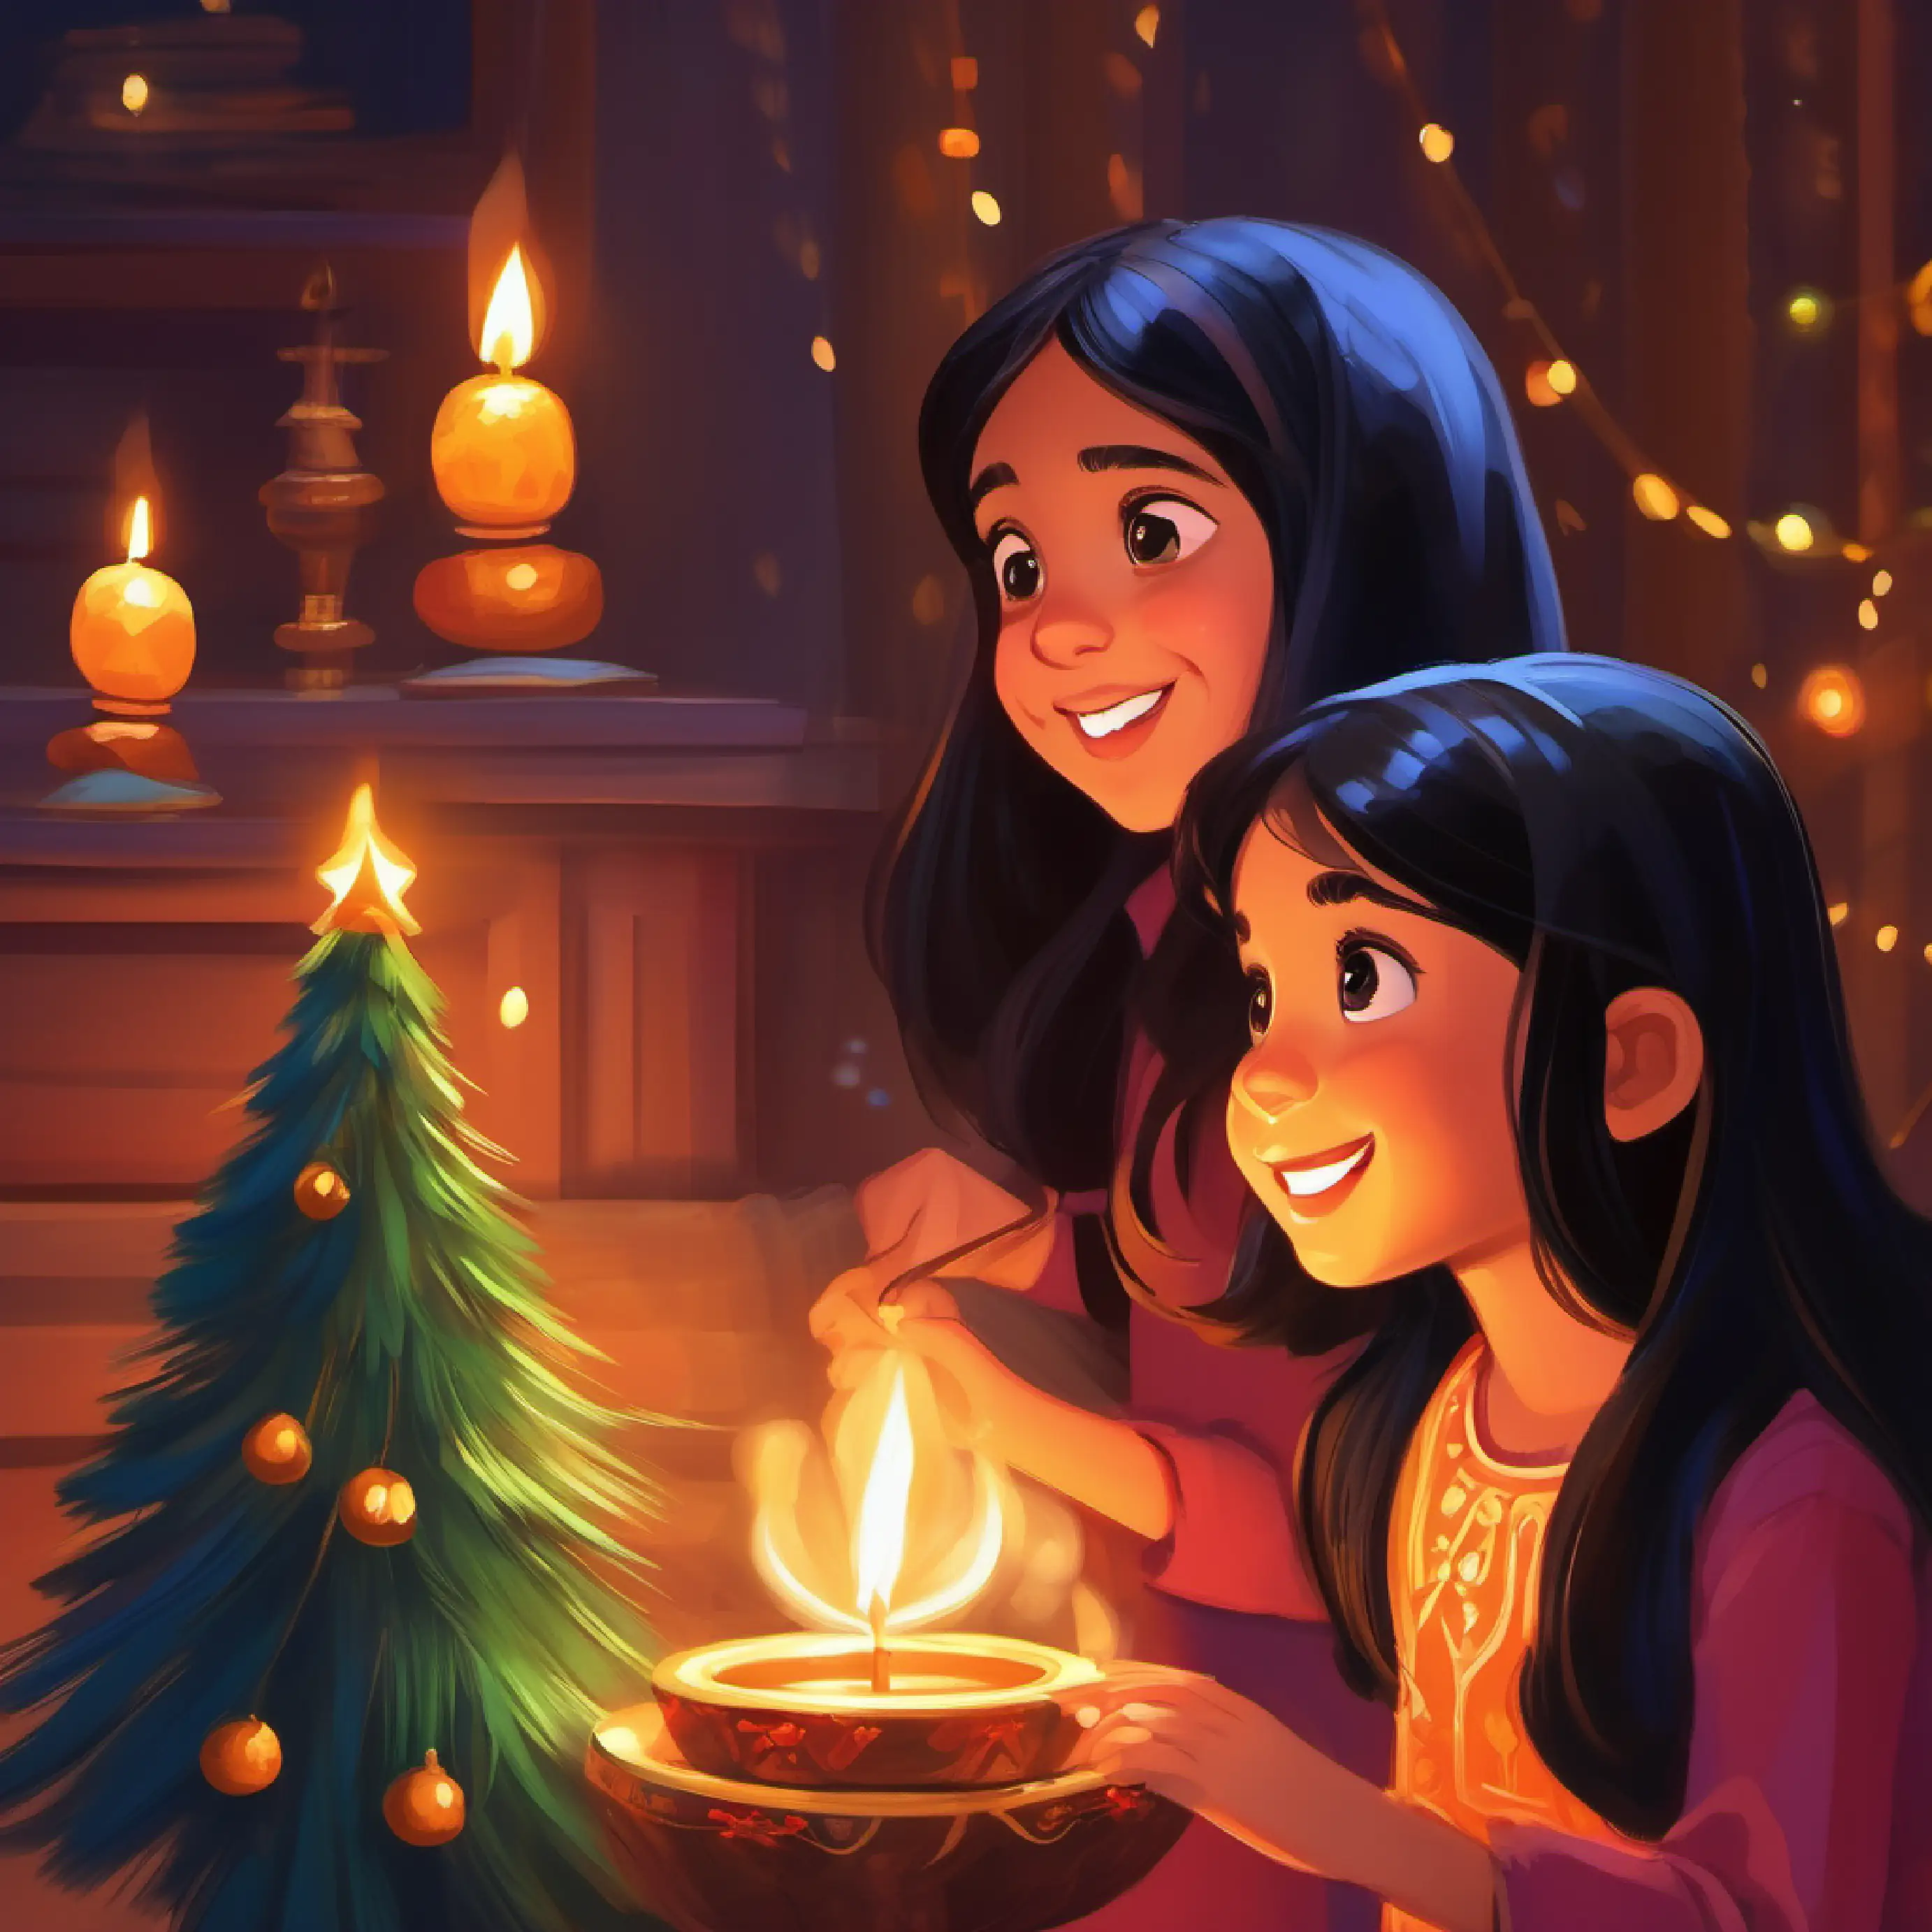 Young girl, long black hair, brown eyes, vibrant smile observes Dad lighting Diwali lamps.